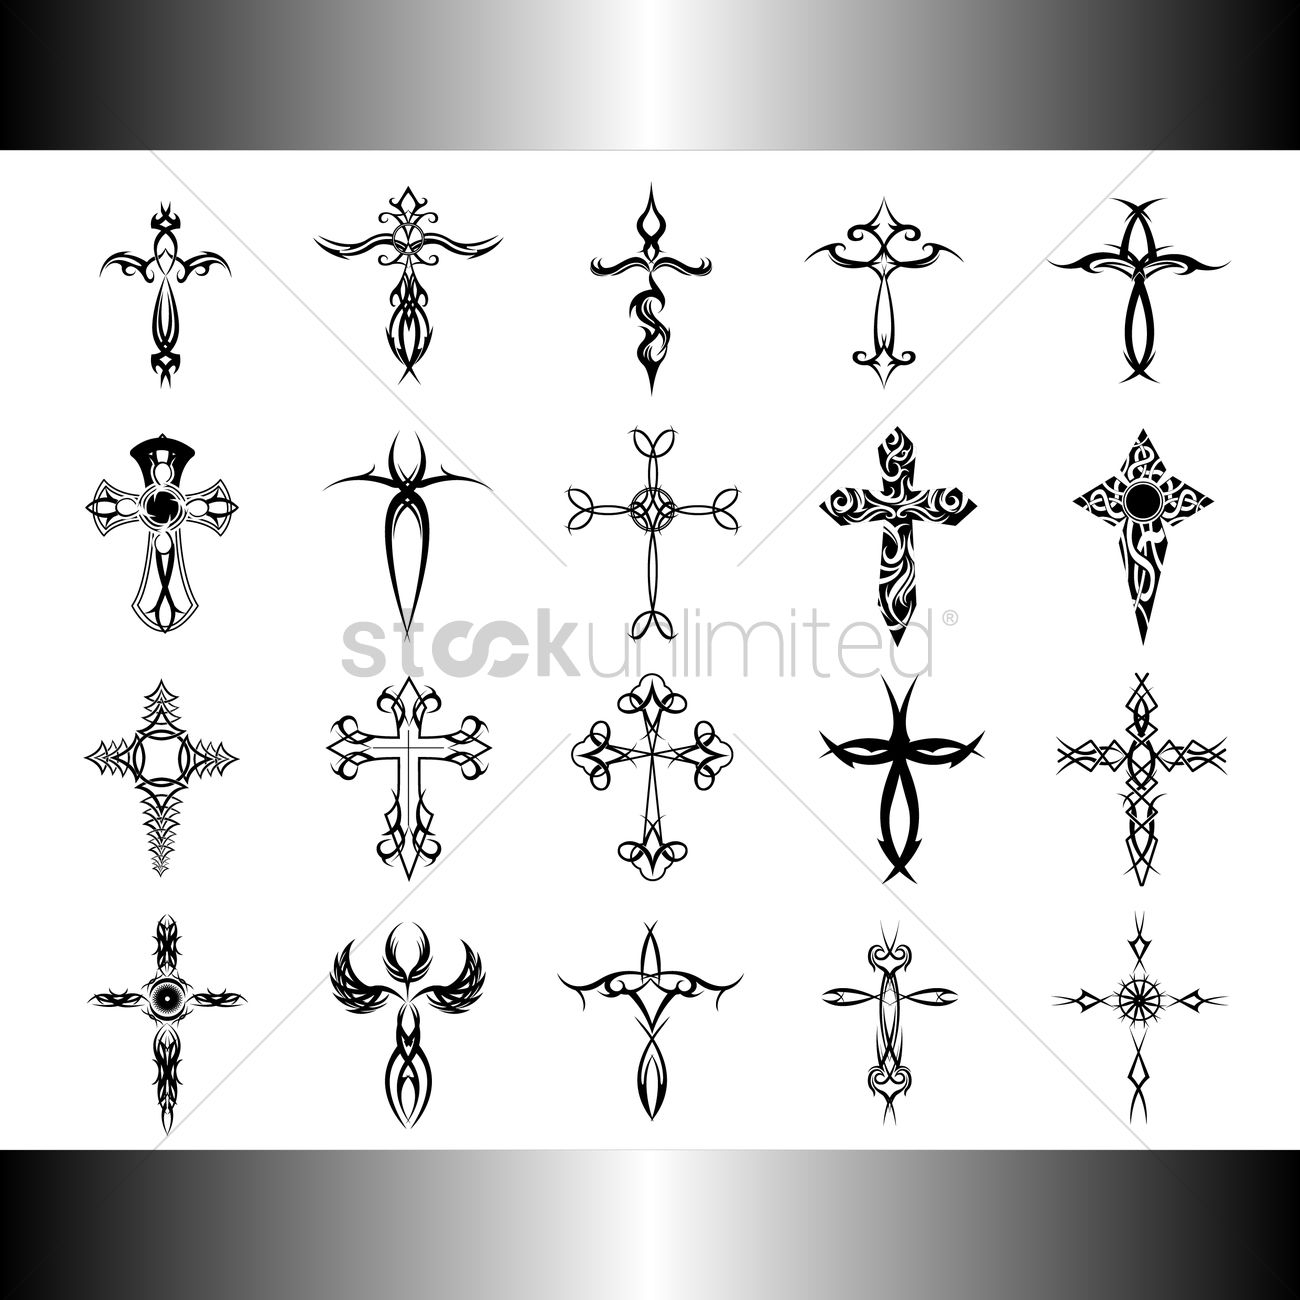 Set Of Tribal Cross Tattoos Vector Image 1524230 Stockunlimited regarding size 1300 X 1300